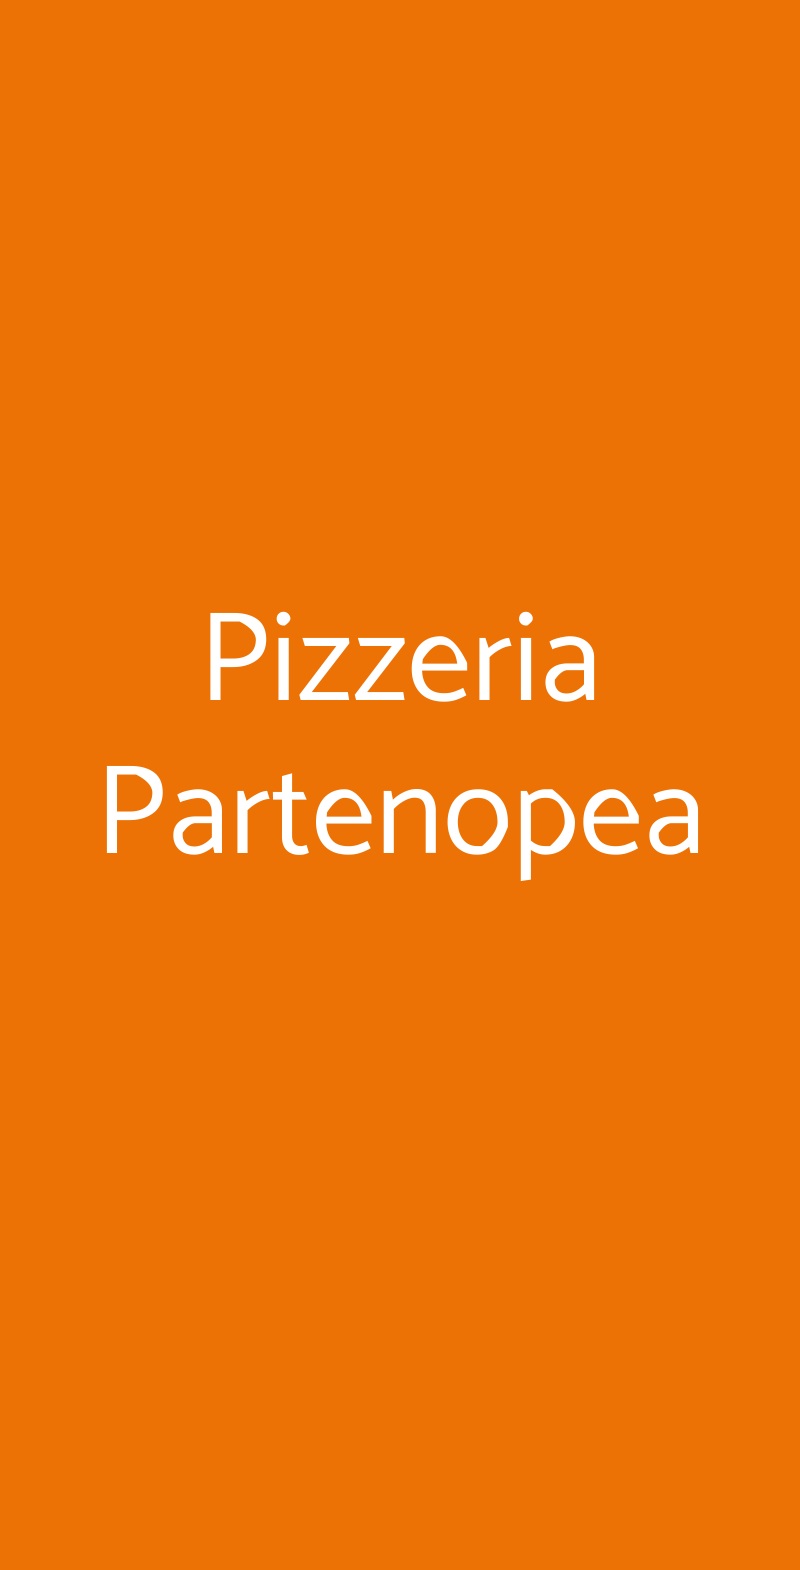 Pizzeria Partenopea Milano menù 1 pagina